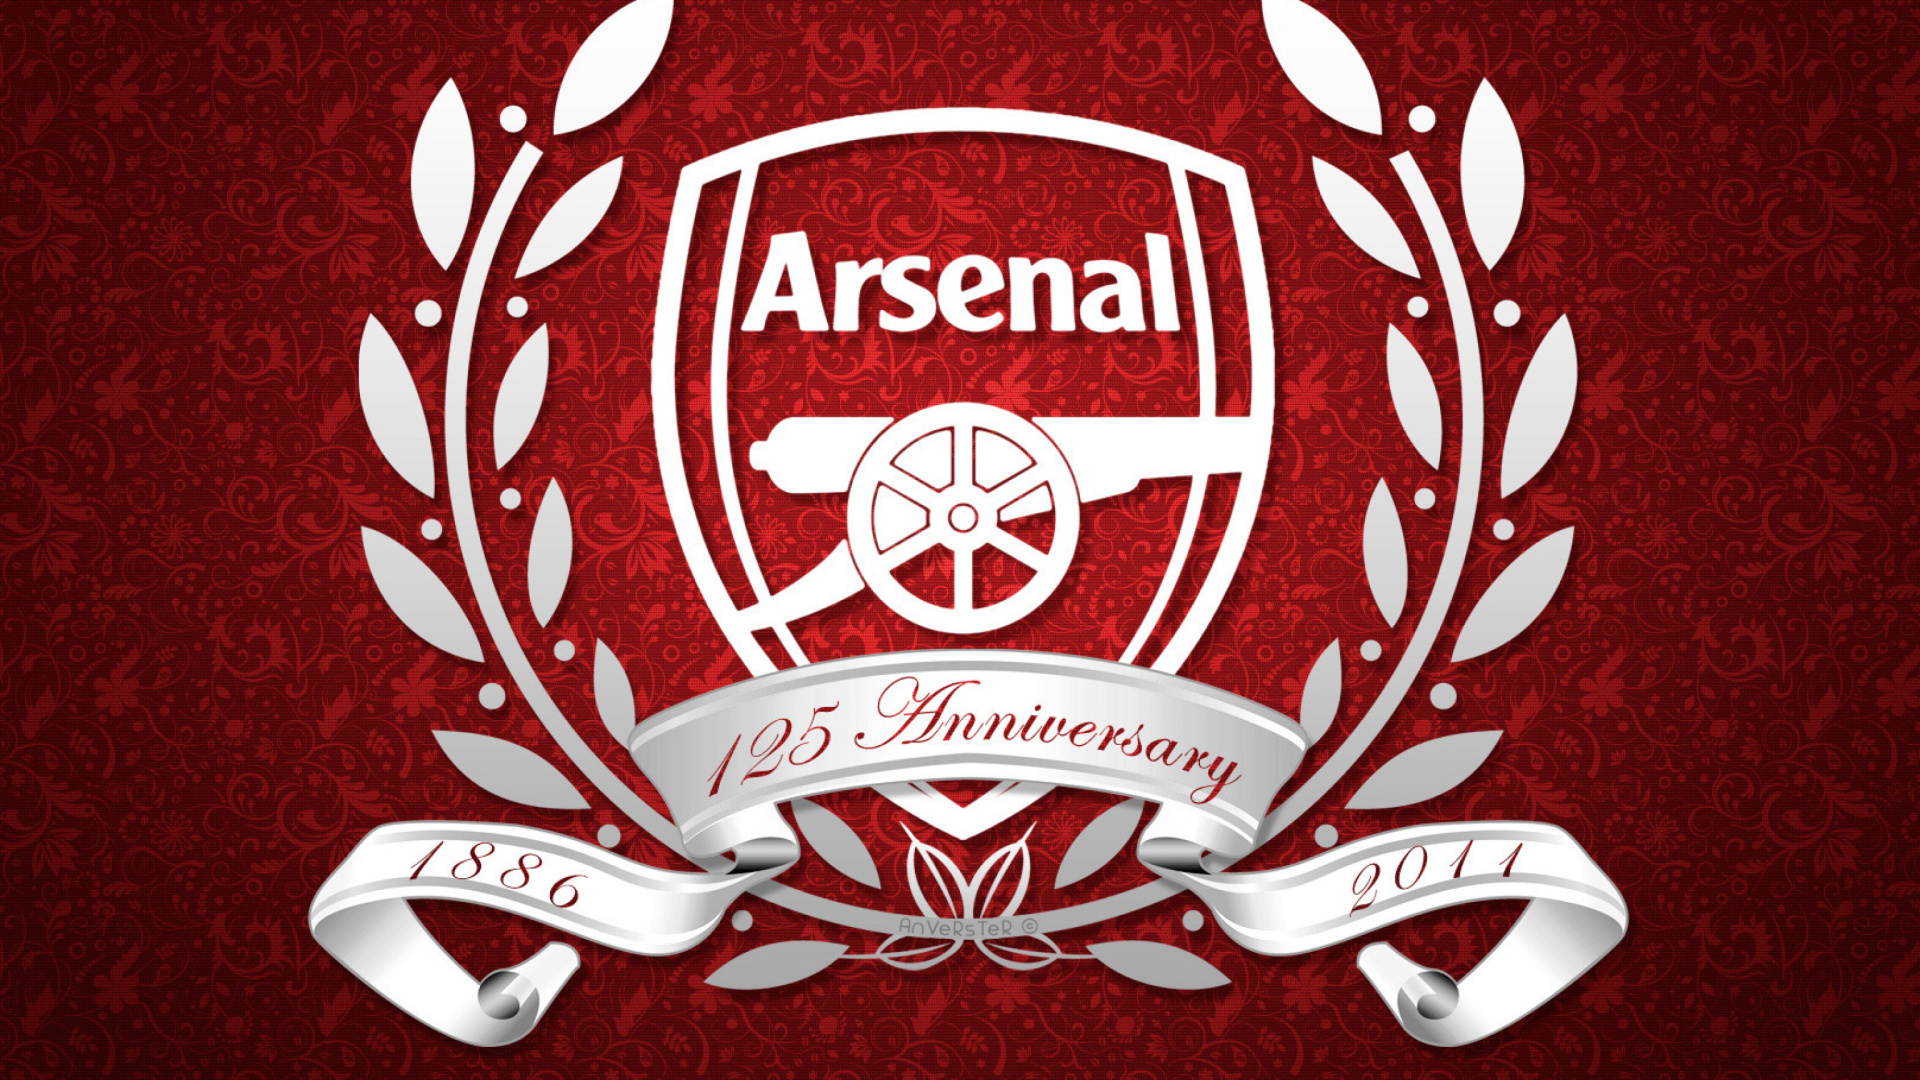 Arsenal FC Emblem wallpaper 1920x1080